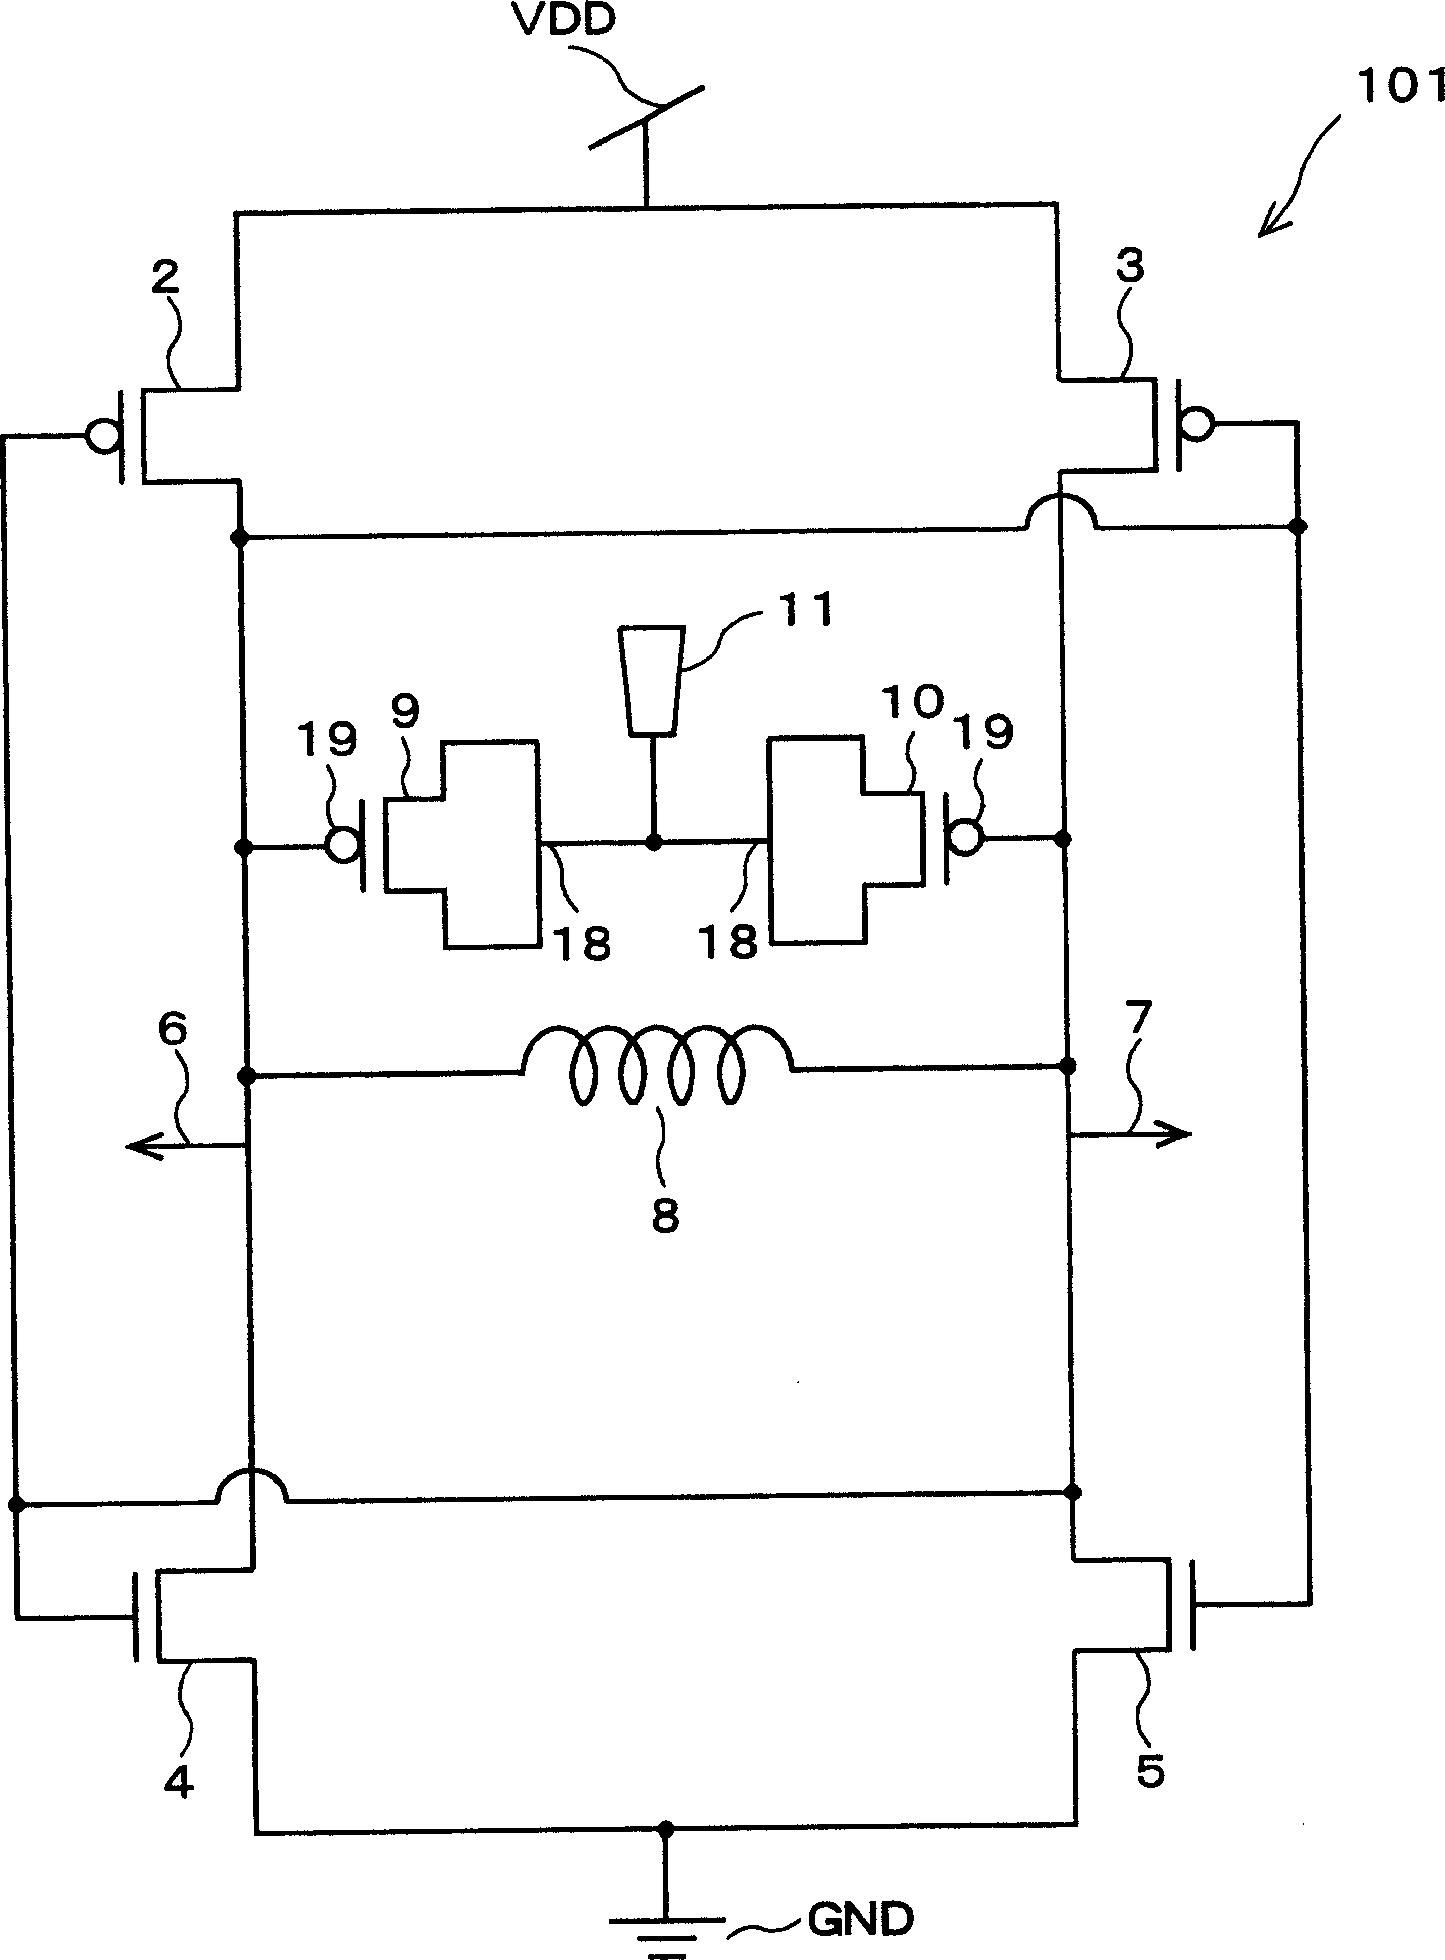 Voltage control oscillator